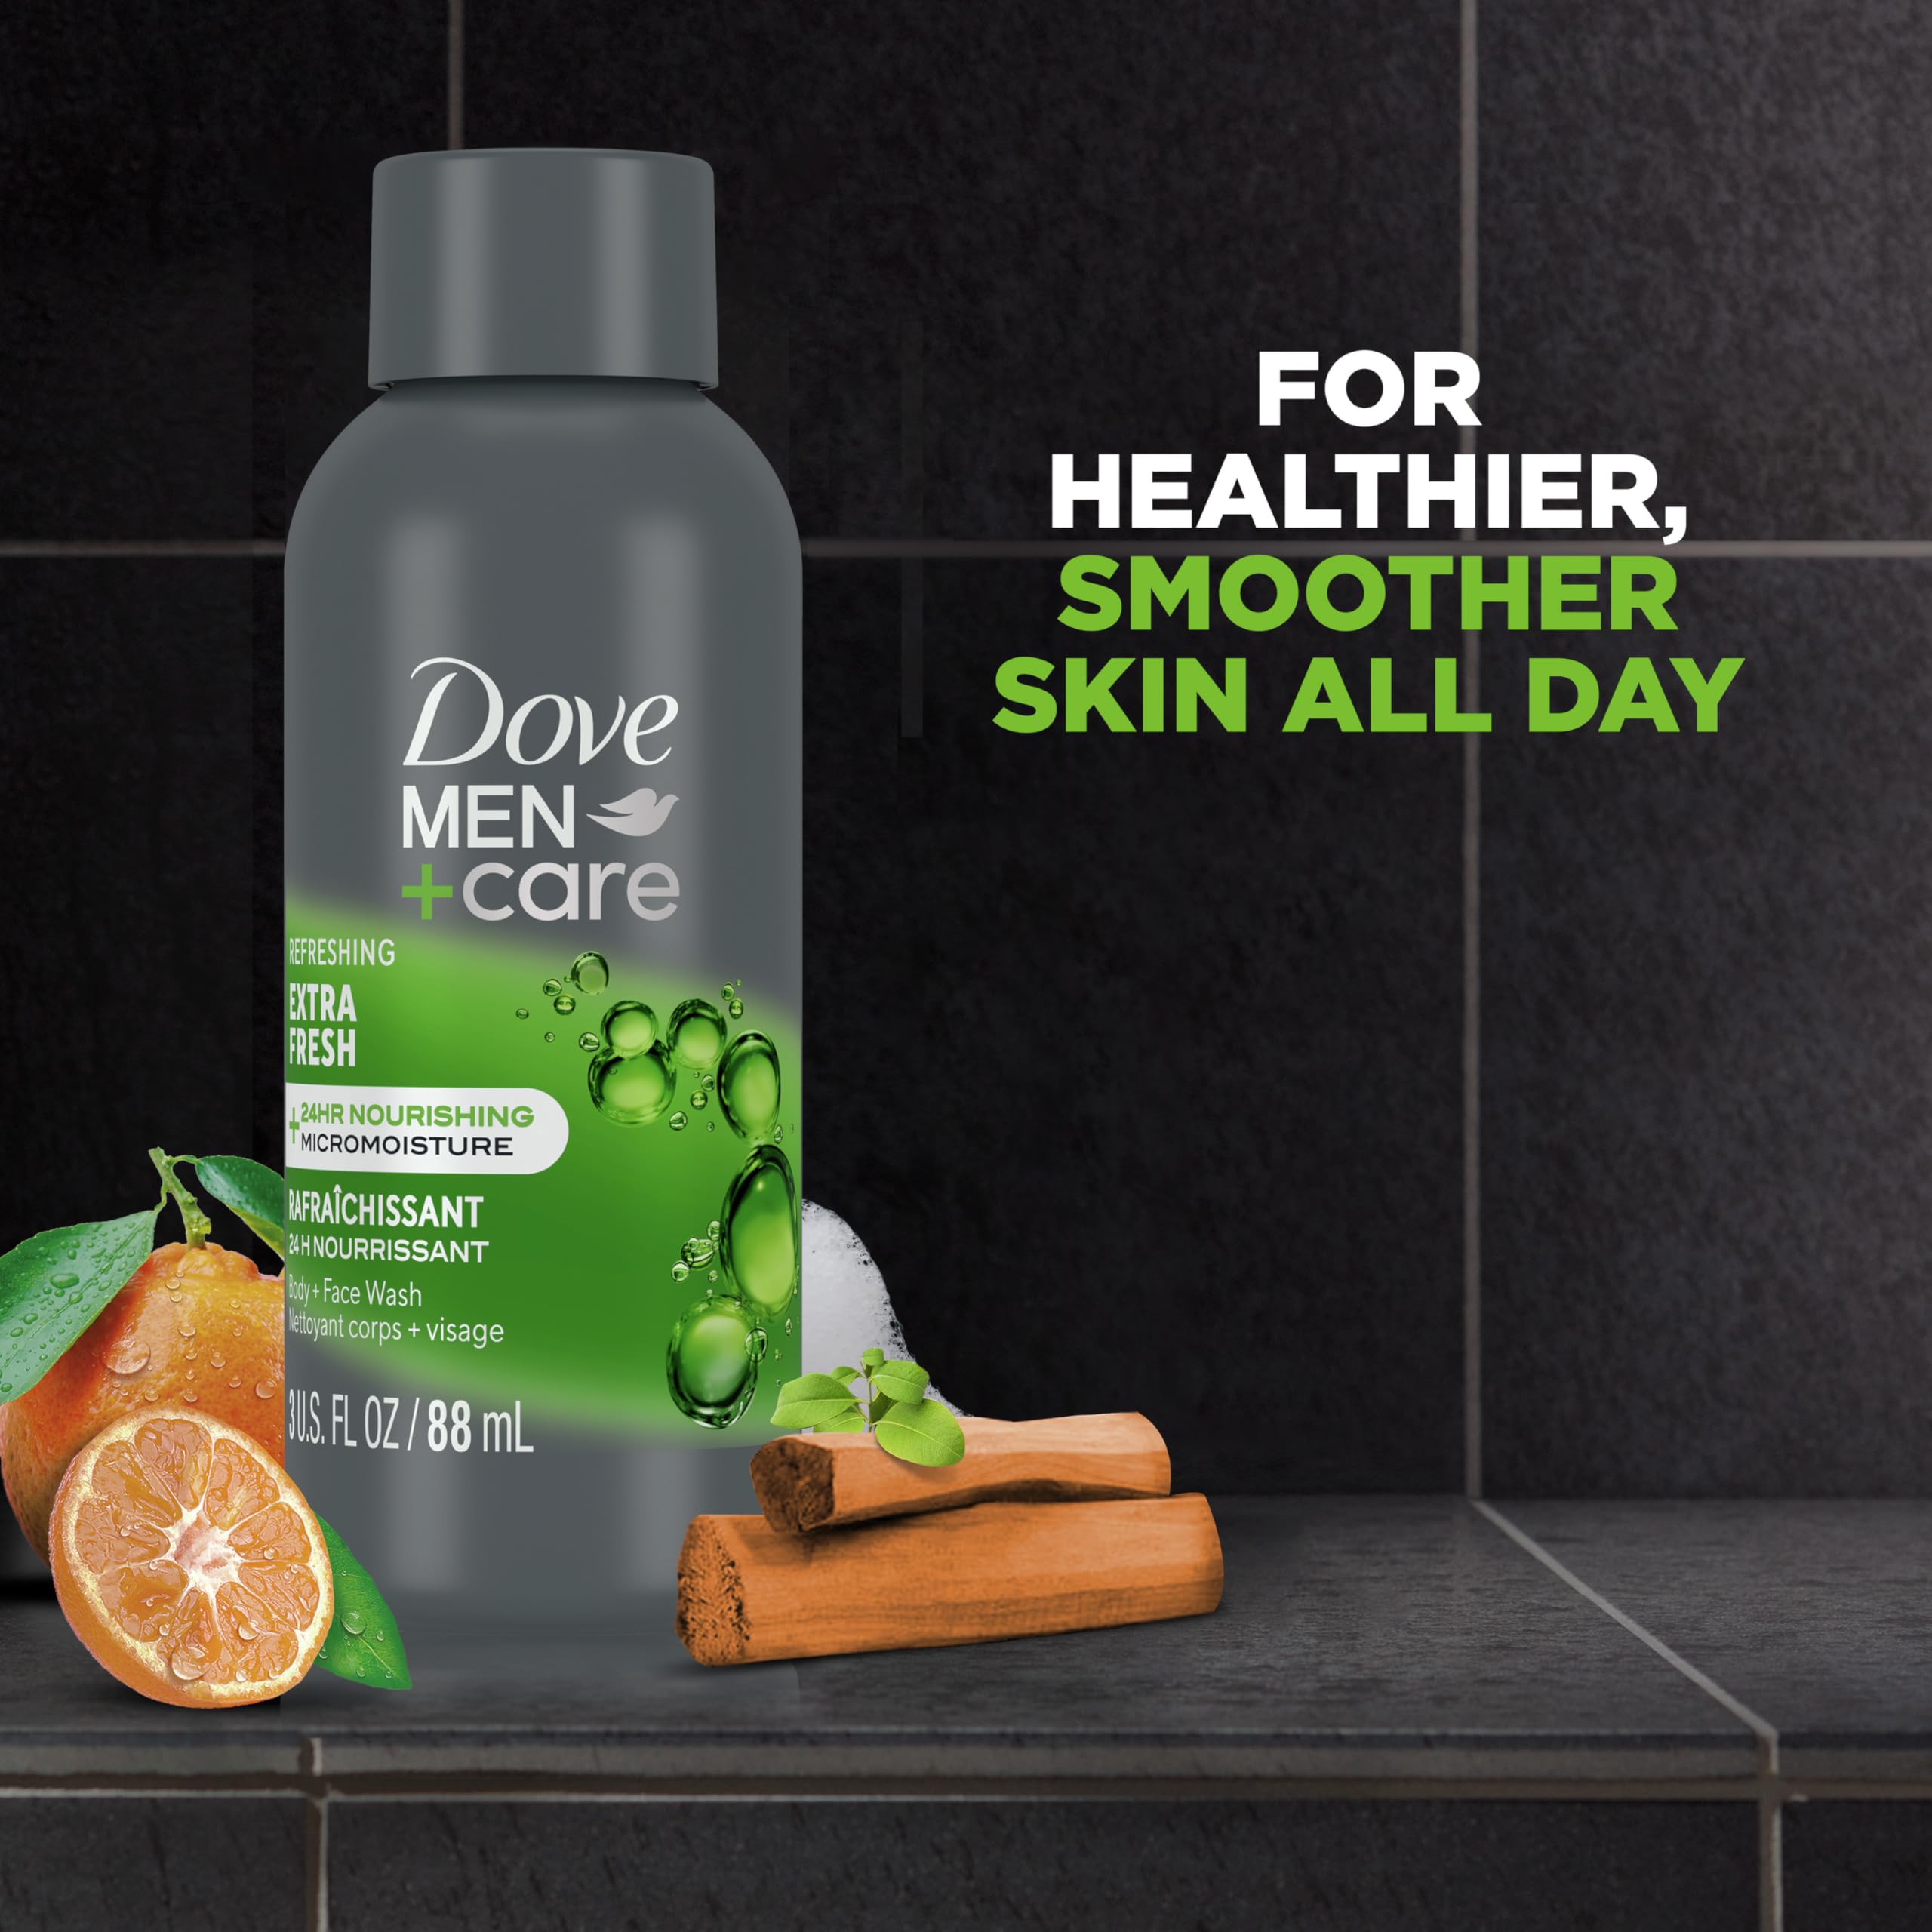 Dove Refreshing Extra Fresh with 24-Hour Nourishing Micromoisture Technology Body Wash for Men 3 oz